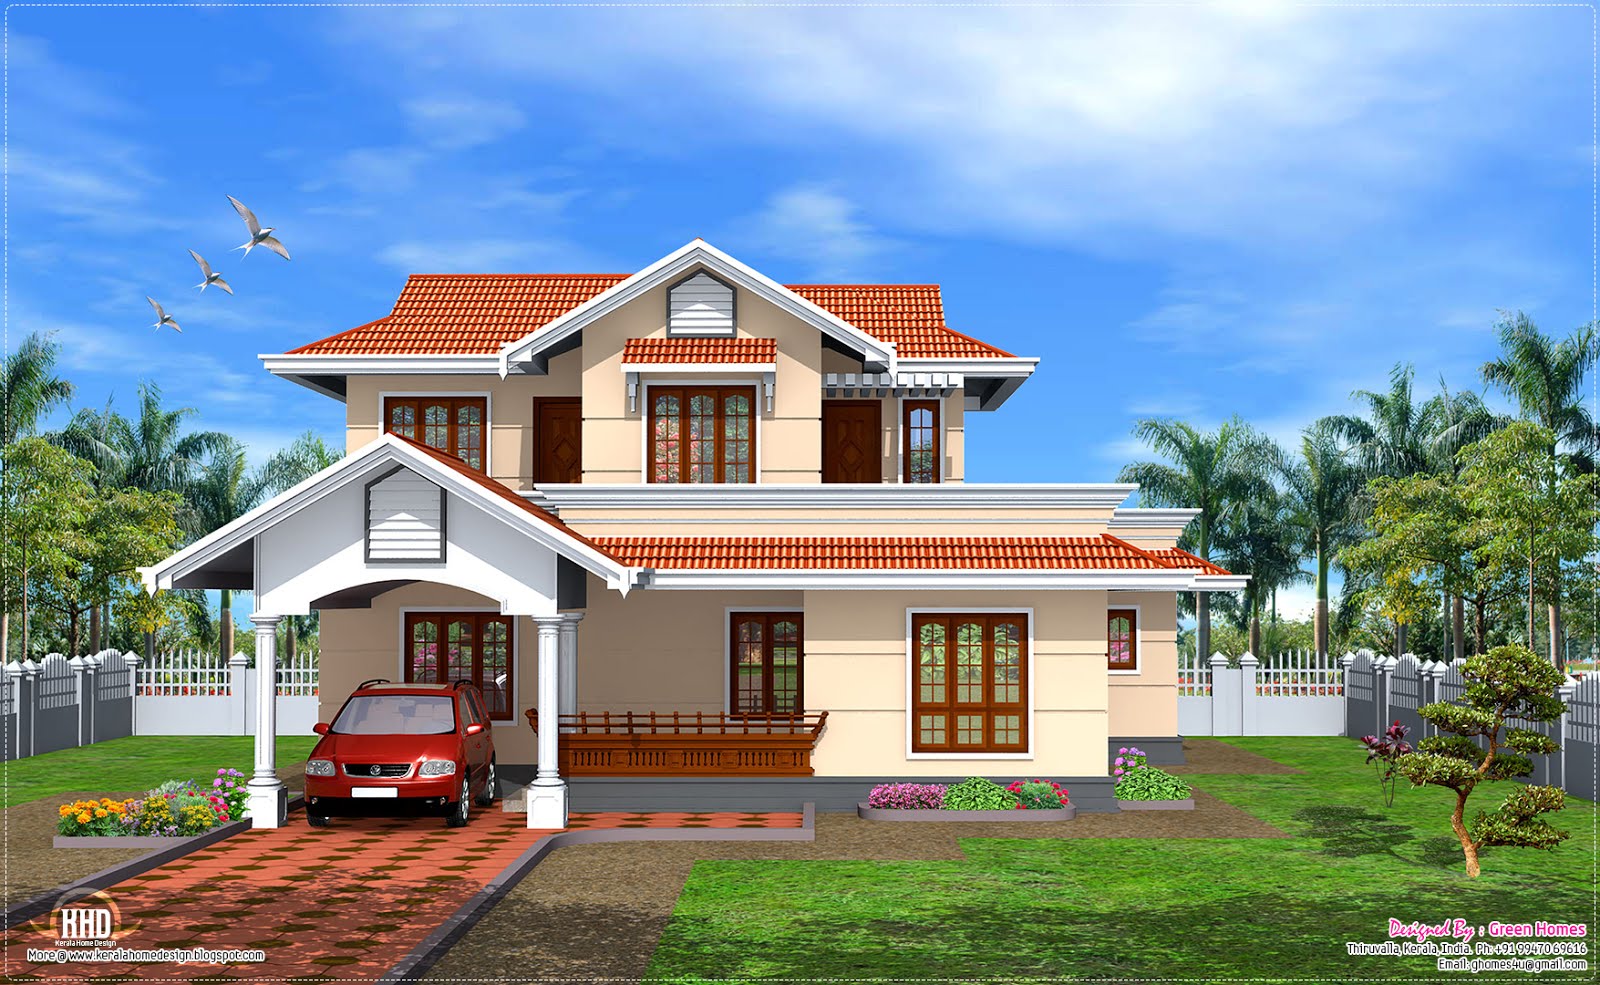  Kerala  model  1900 sq feet home  design Kerala  home  design 